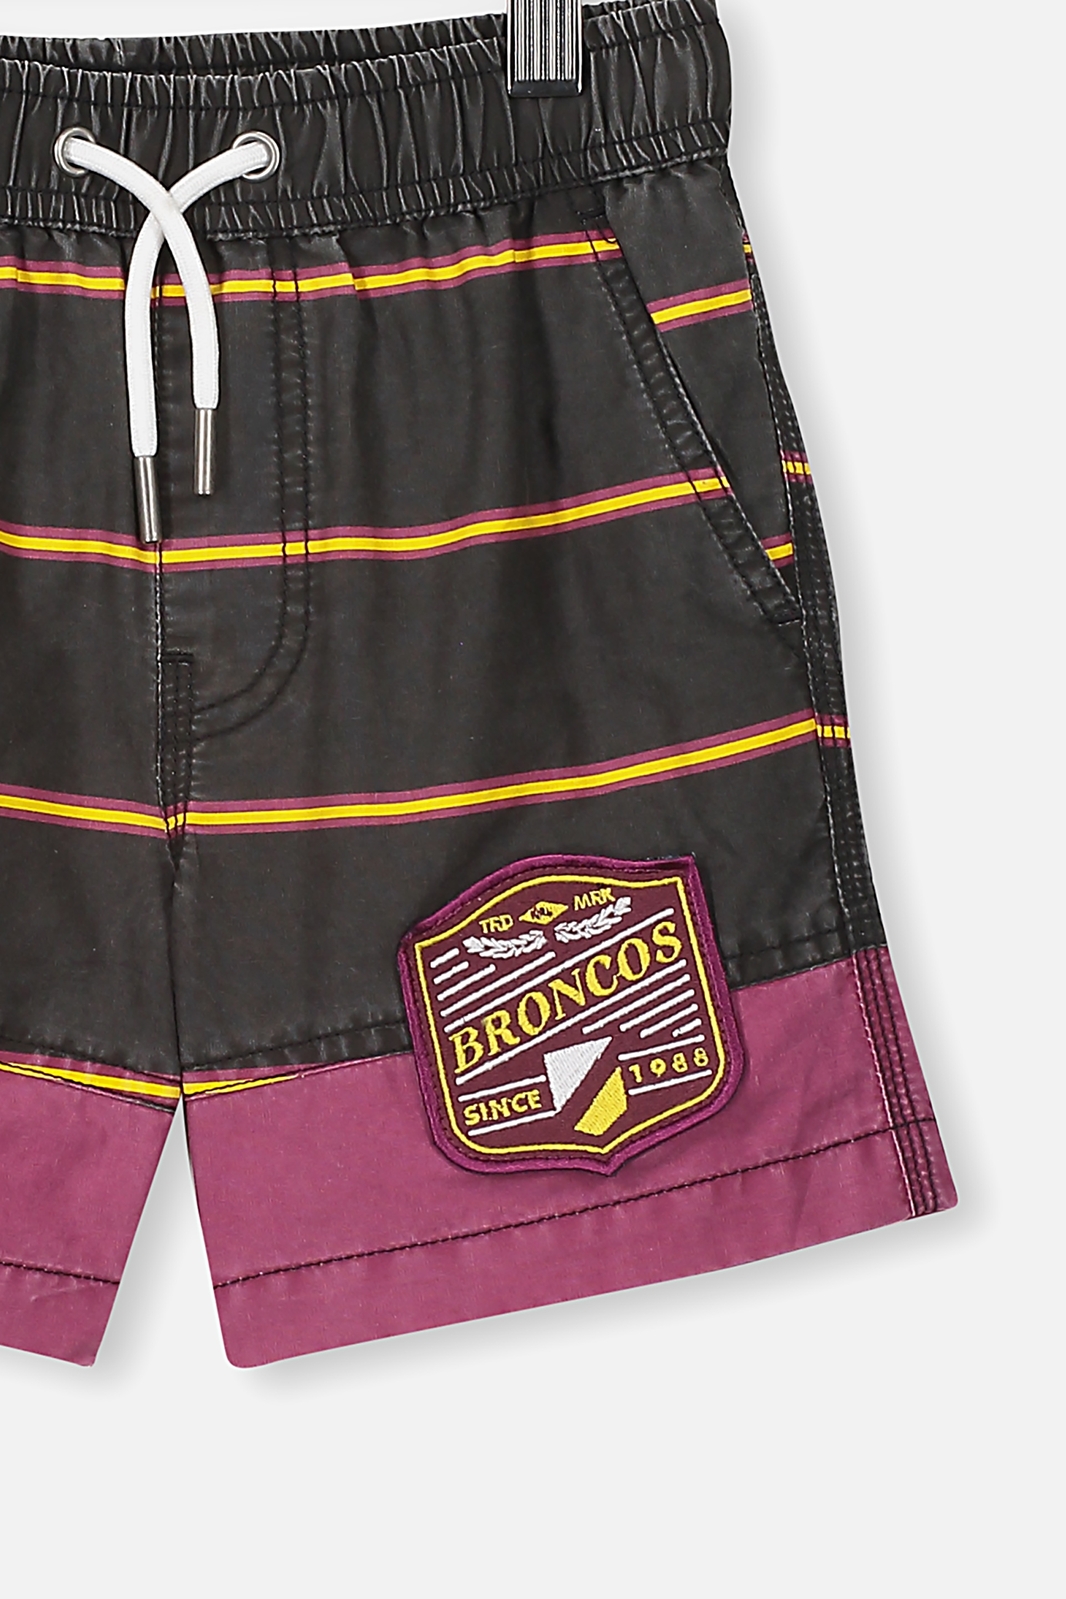 Details about   Brisbane Broncos NRL 2021 Cotton On Striped Board Shorts Boys Sizes 1yrs-10yrs!